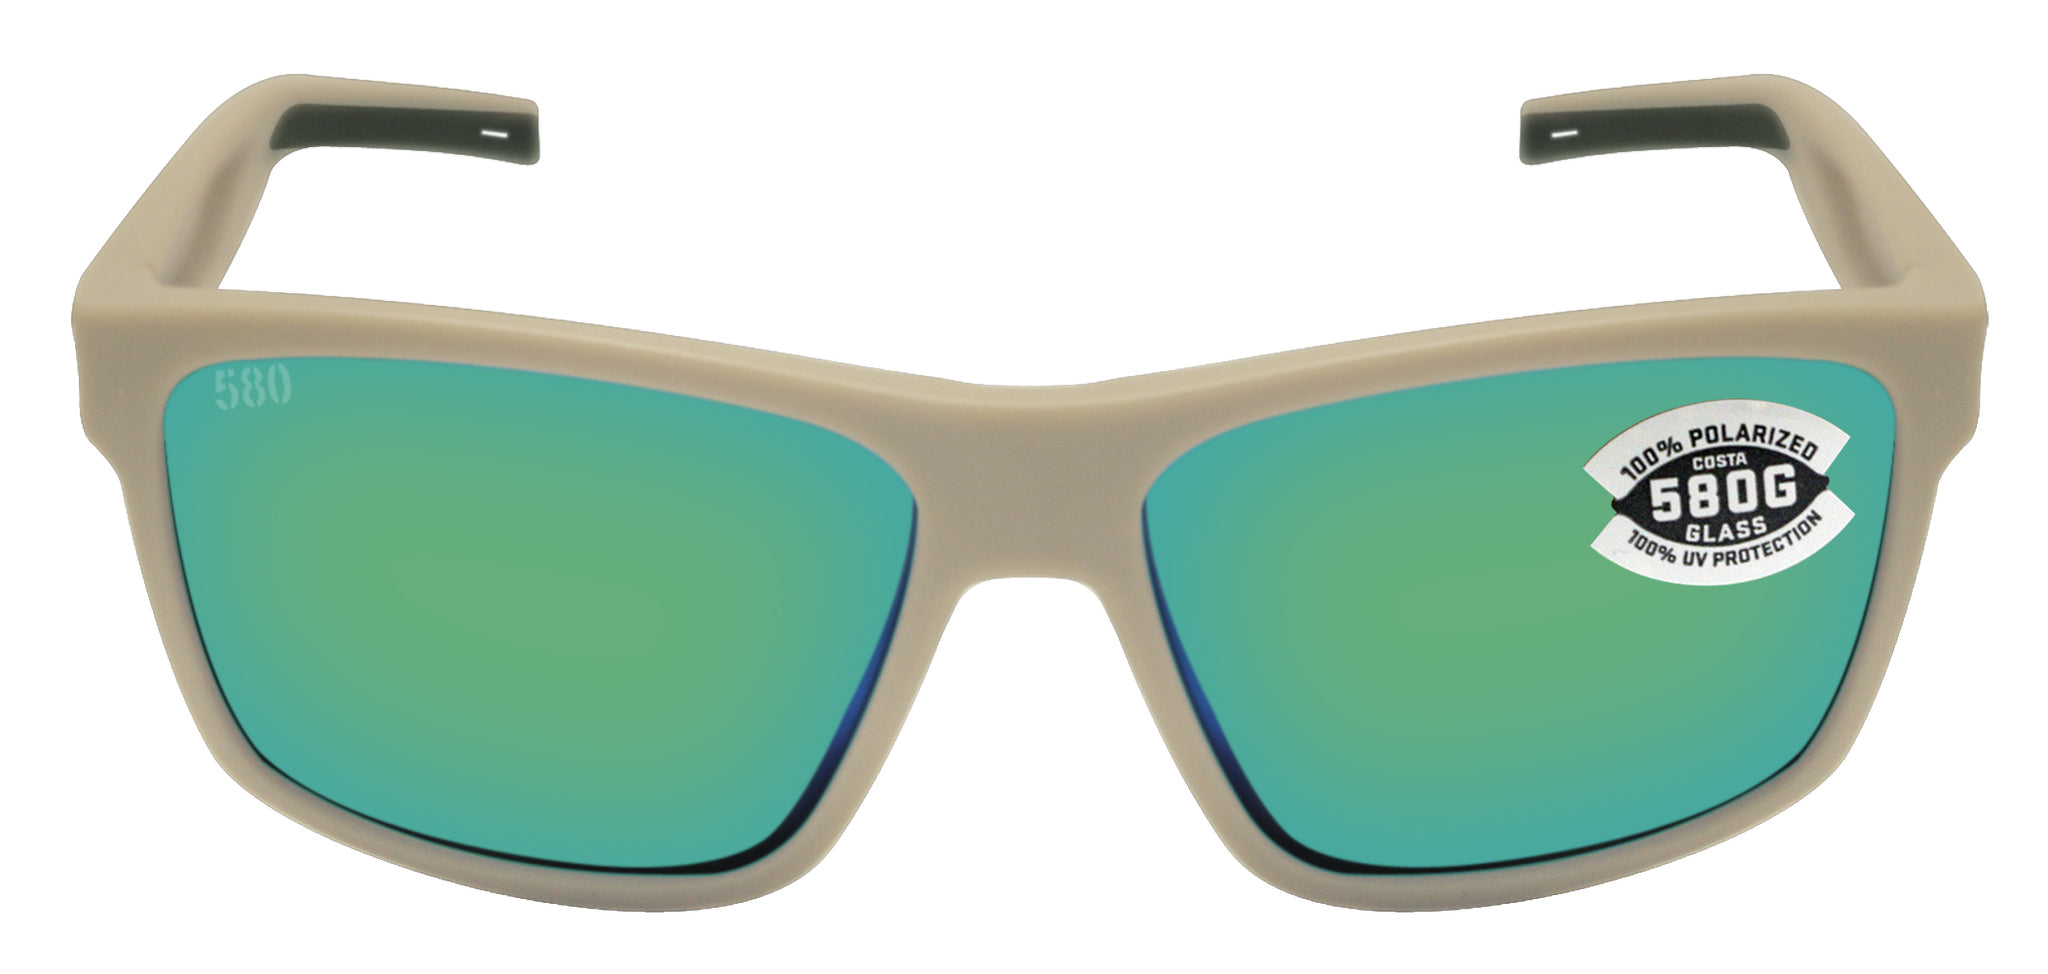 Sea-Doo Sand Polarized Floating Sunglasses - 44874600 Green